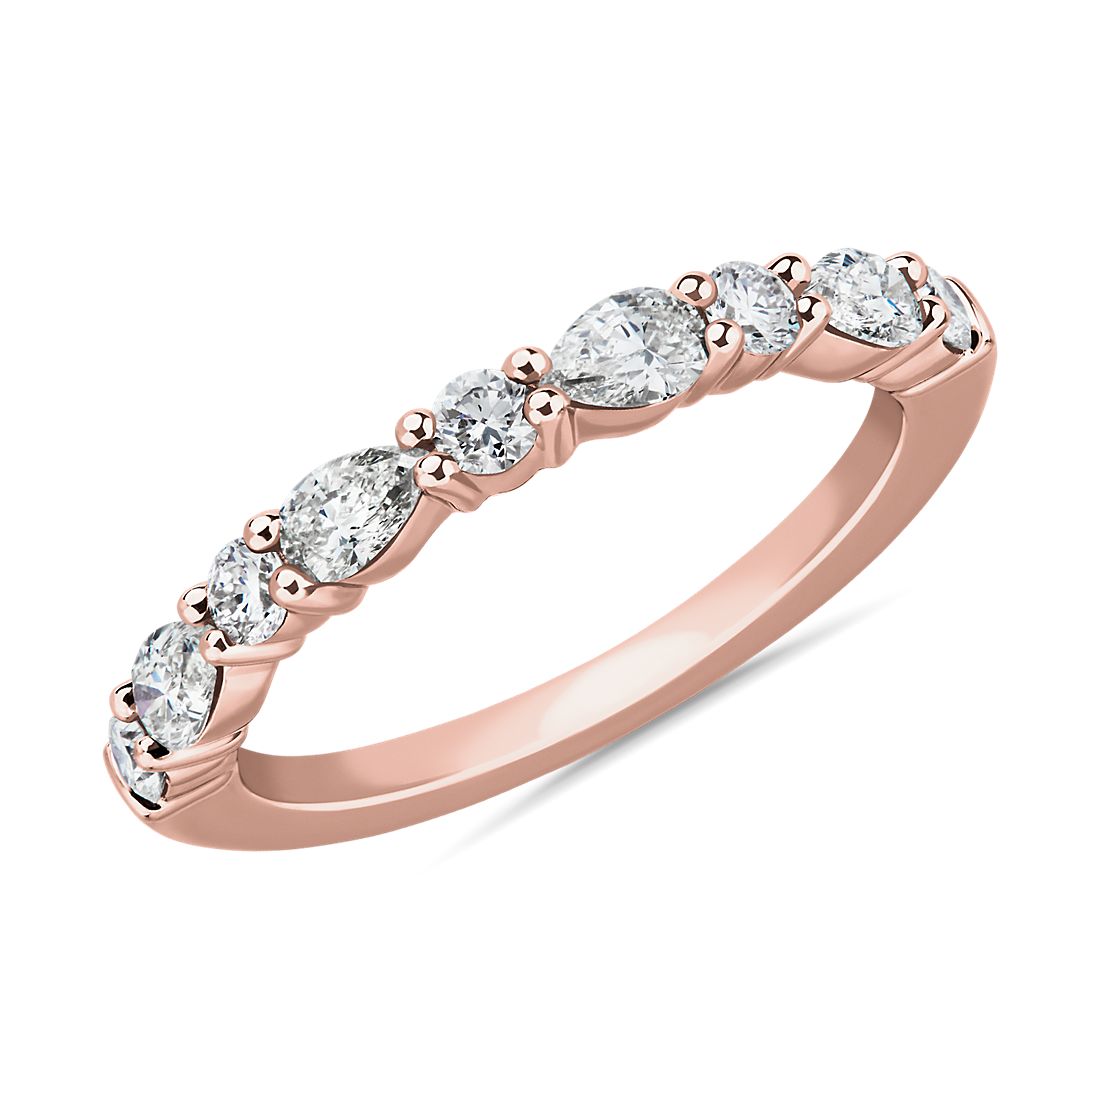 J'adore Le Jardin Diamond Wedding Ring in 18k Rose Gold (0.59 ct. tw.)